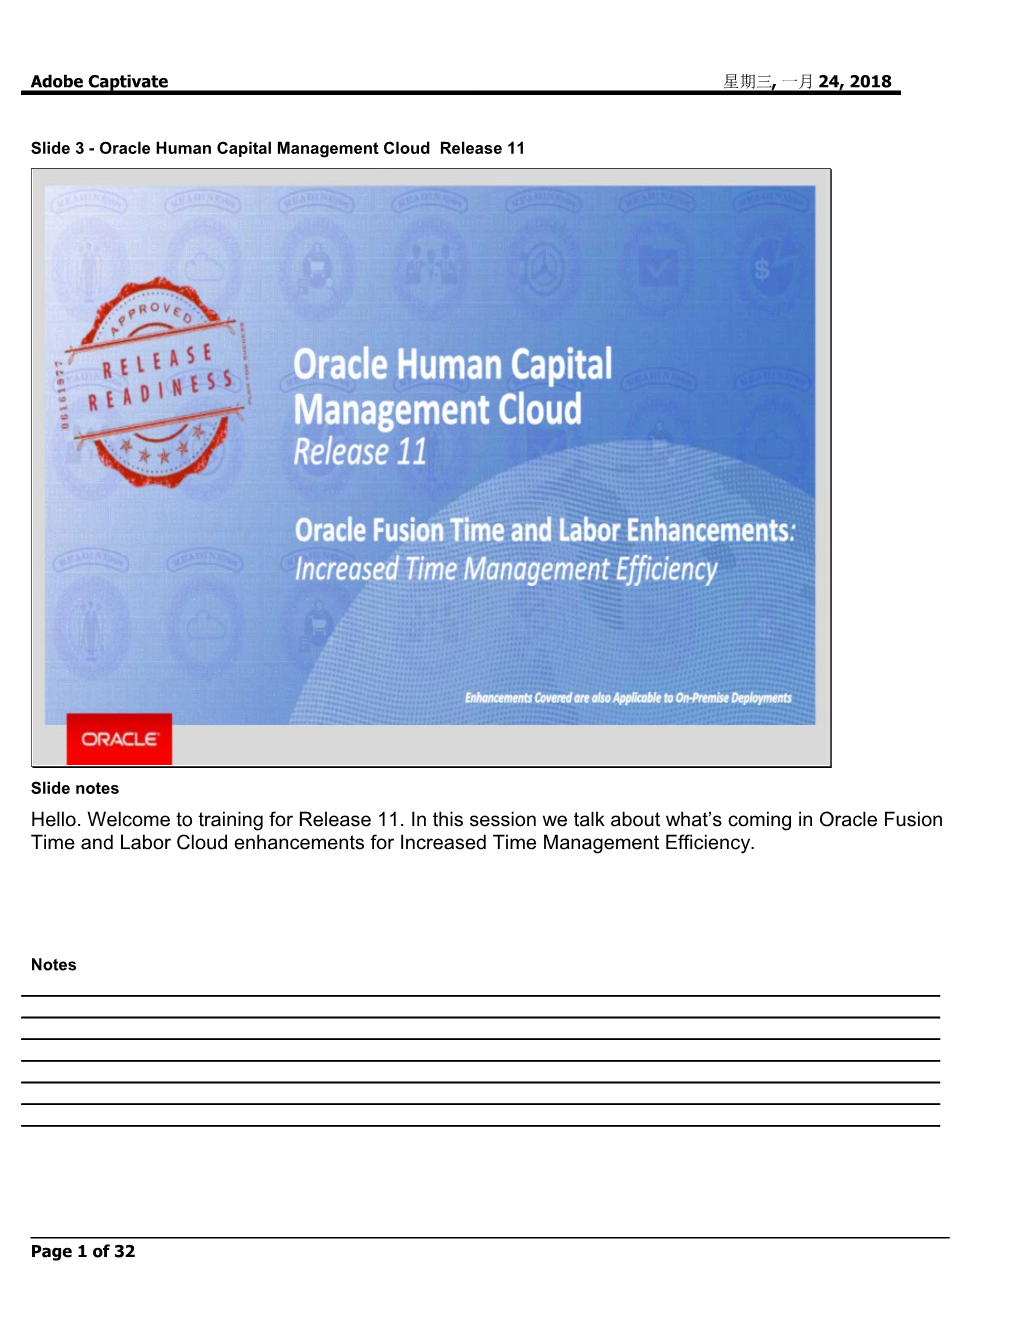 Slide 3 - Oracle Human Capital Management Cloud Release 11